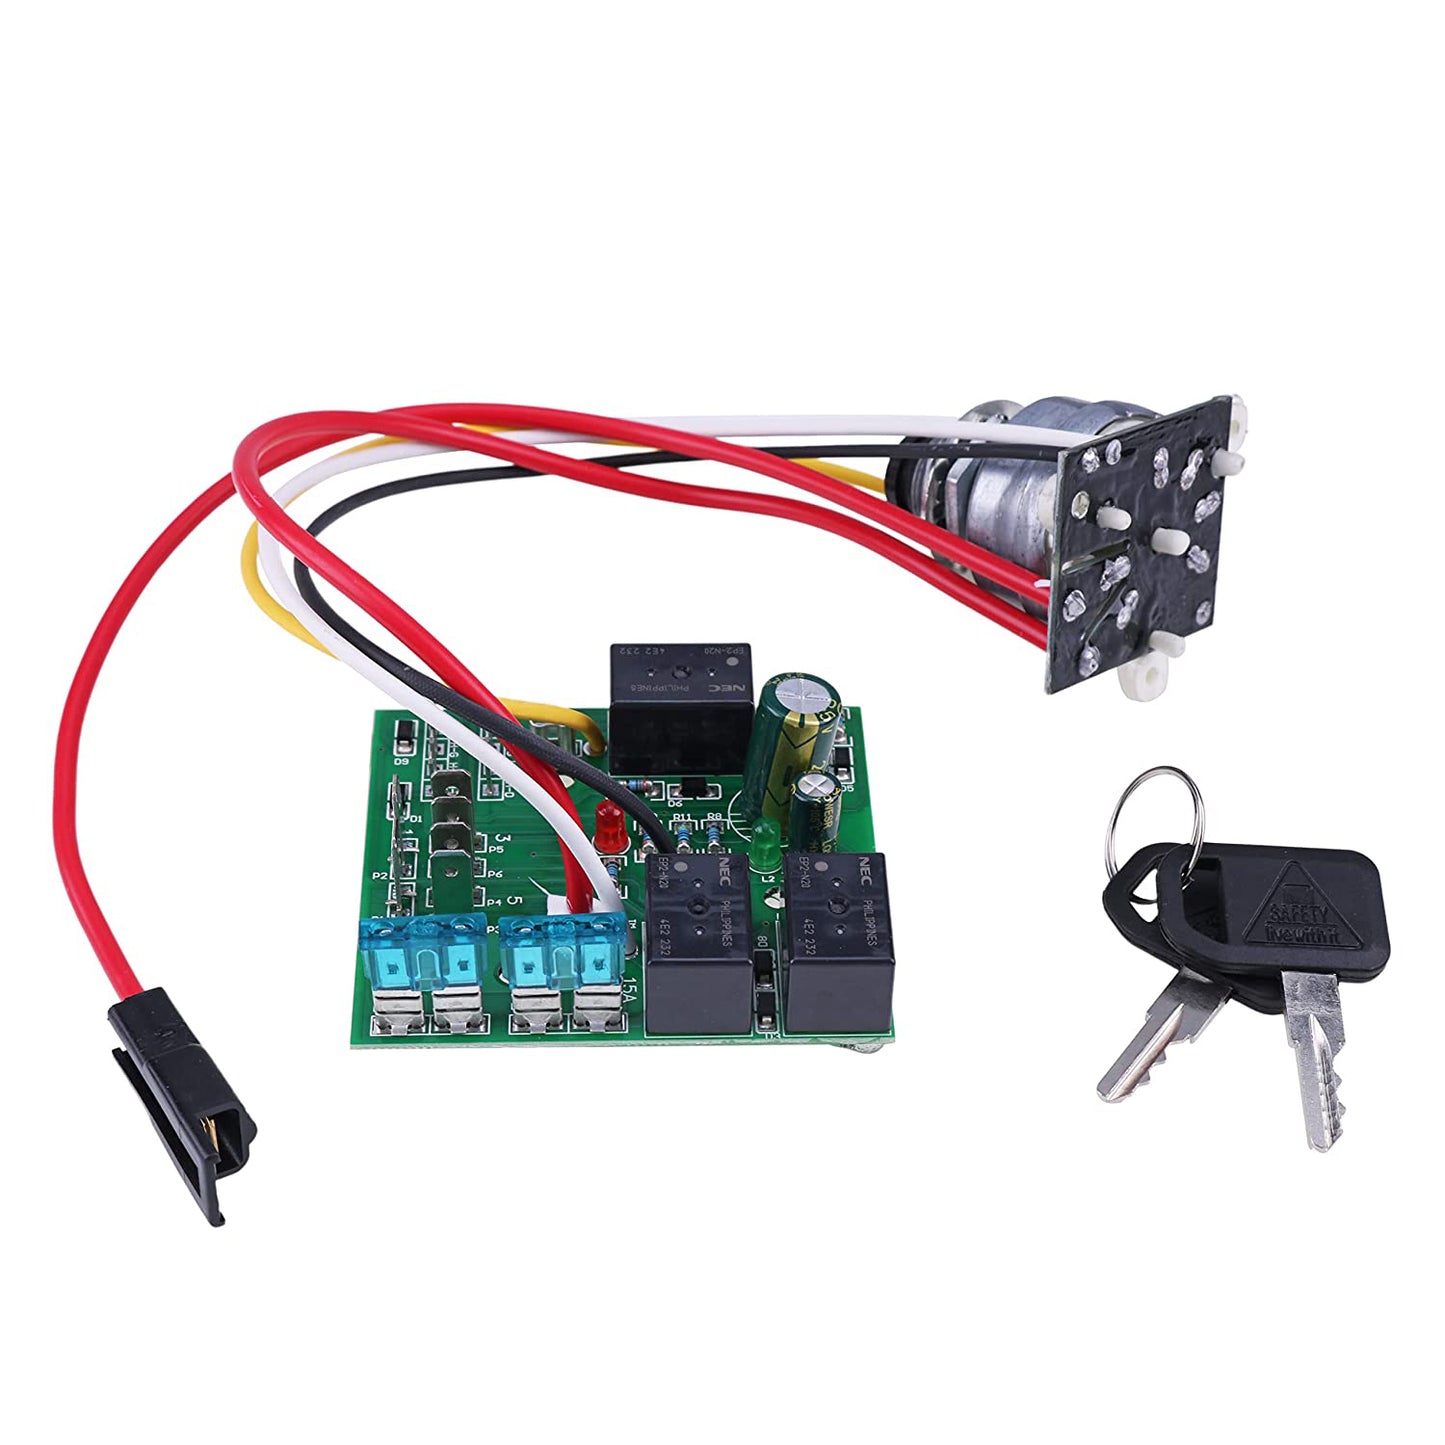 New AM132500 Ignition Switch Module with Keys Compatible with John Deere LX255 LX266 LX277 LX279 LX280 LX288 X465 X575 X585 X595 325 335 345 355D GX255 GX325 GX335 GTX345 GX355 GT225 GT235 GT245